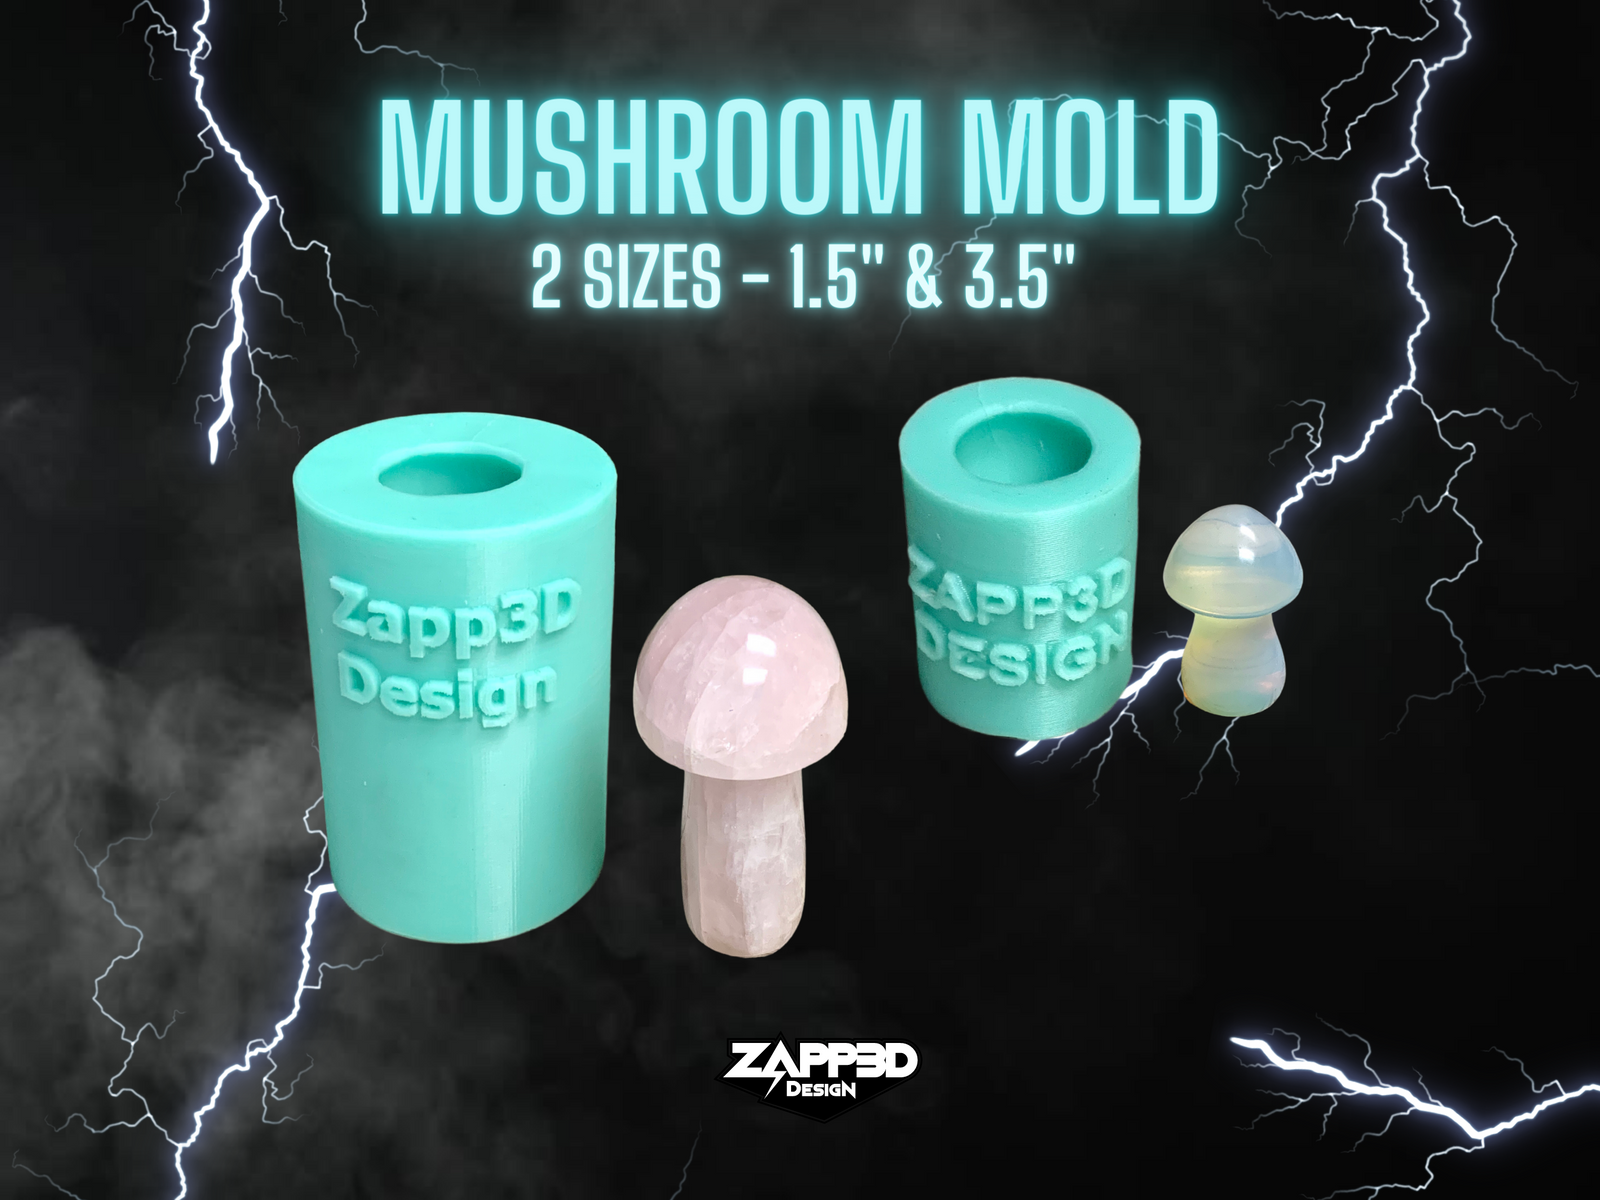 3D Mushroom Mold Mushroom Candle Mold Mushroom Resin Mold Mould